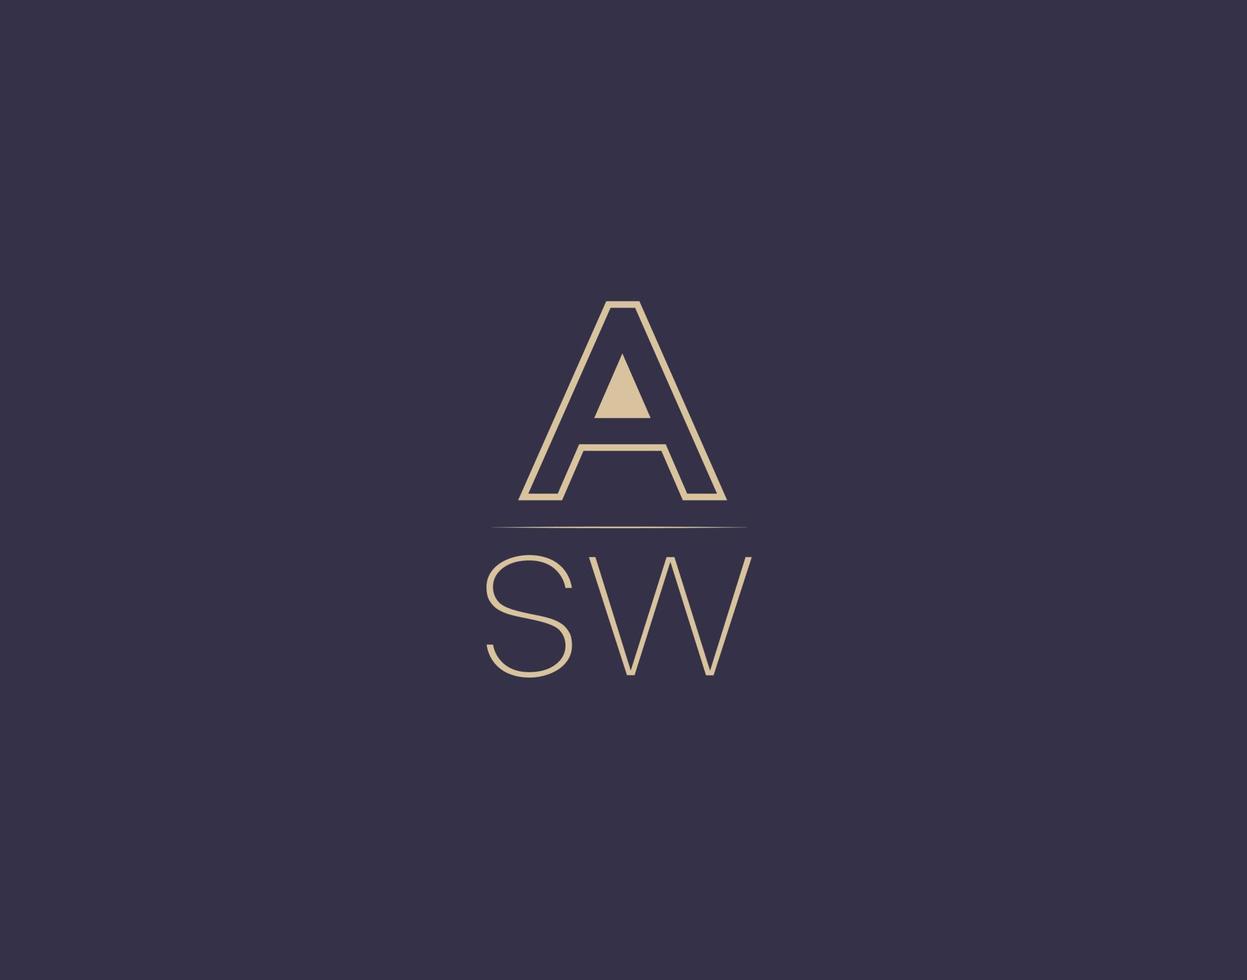 asw letter logo design imagens vetoriais minimalistas modernas vetor